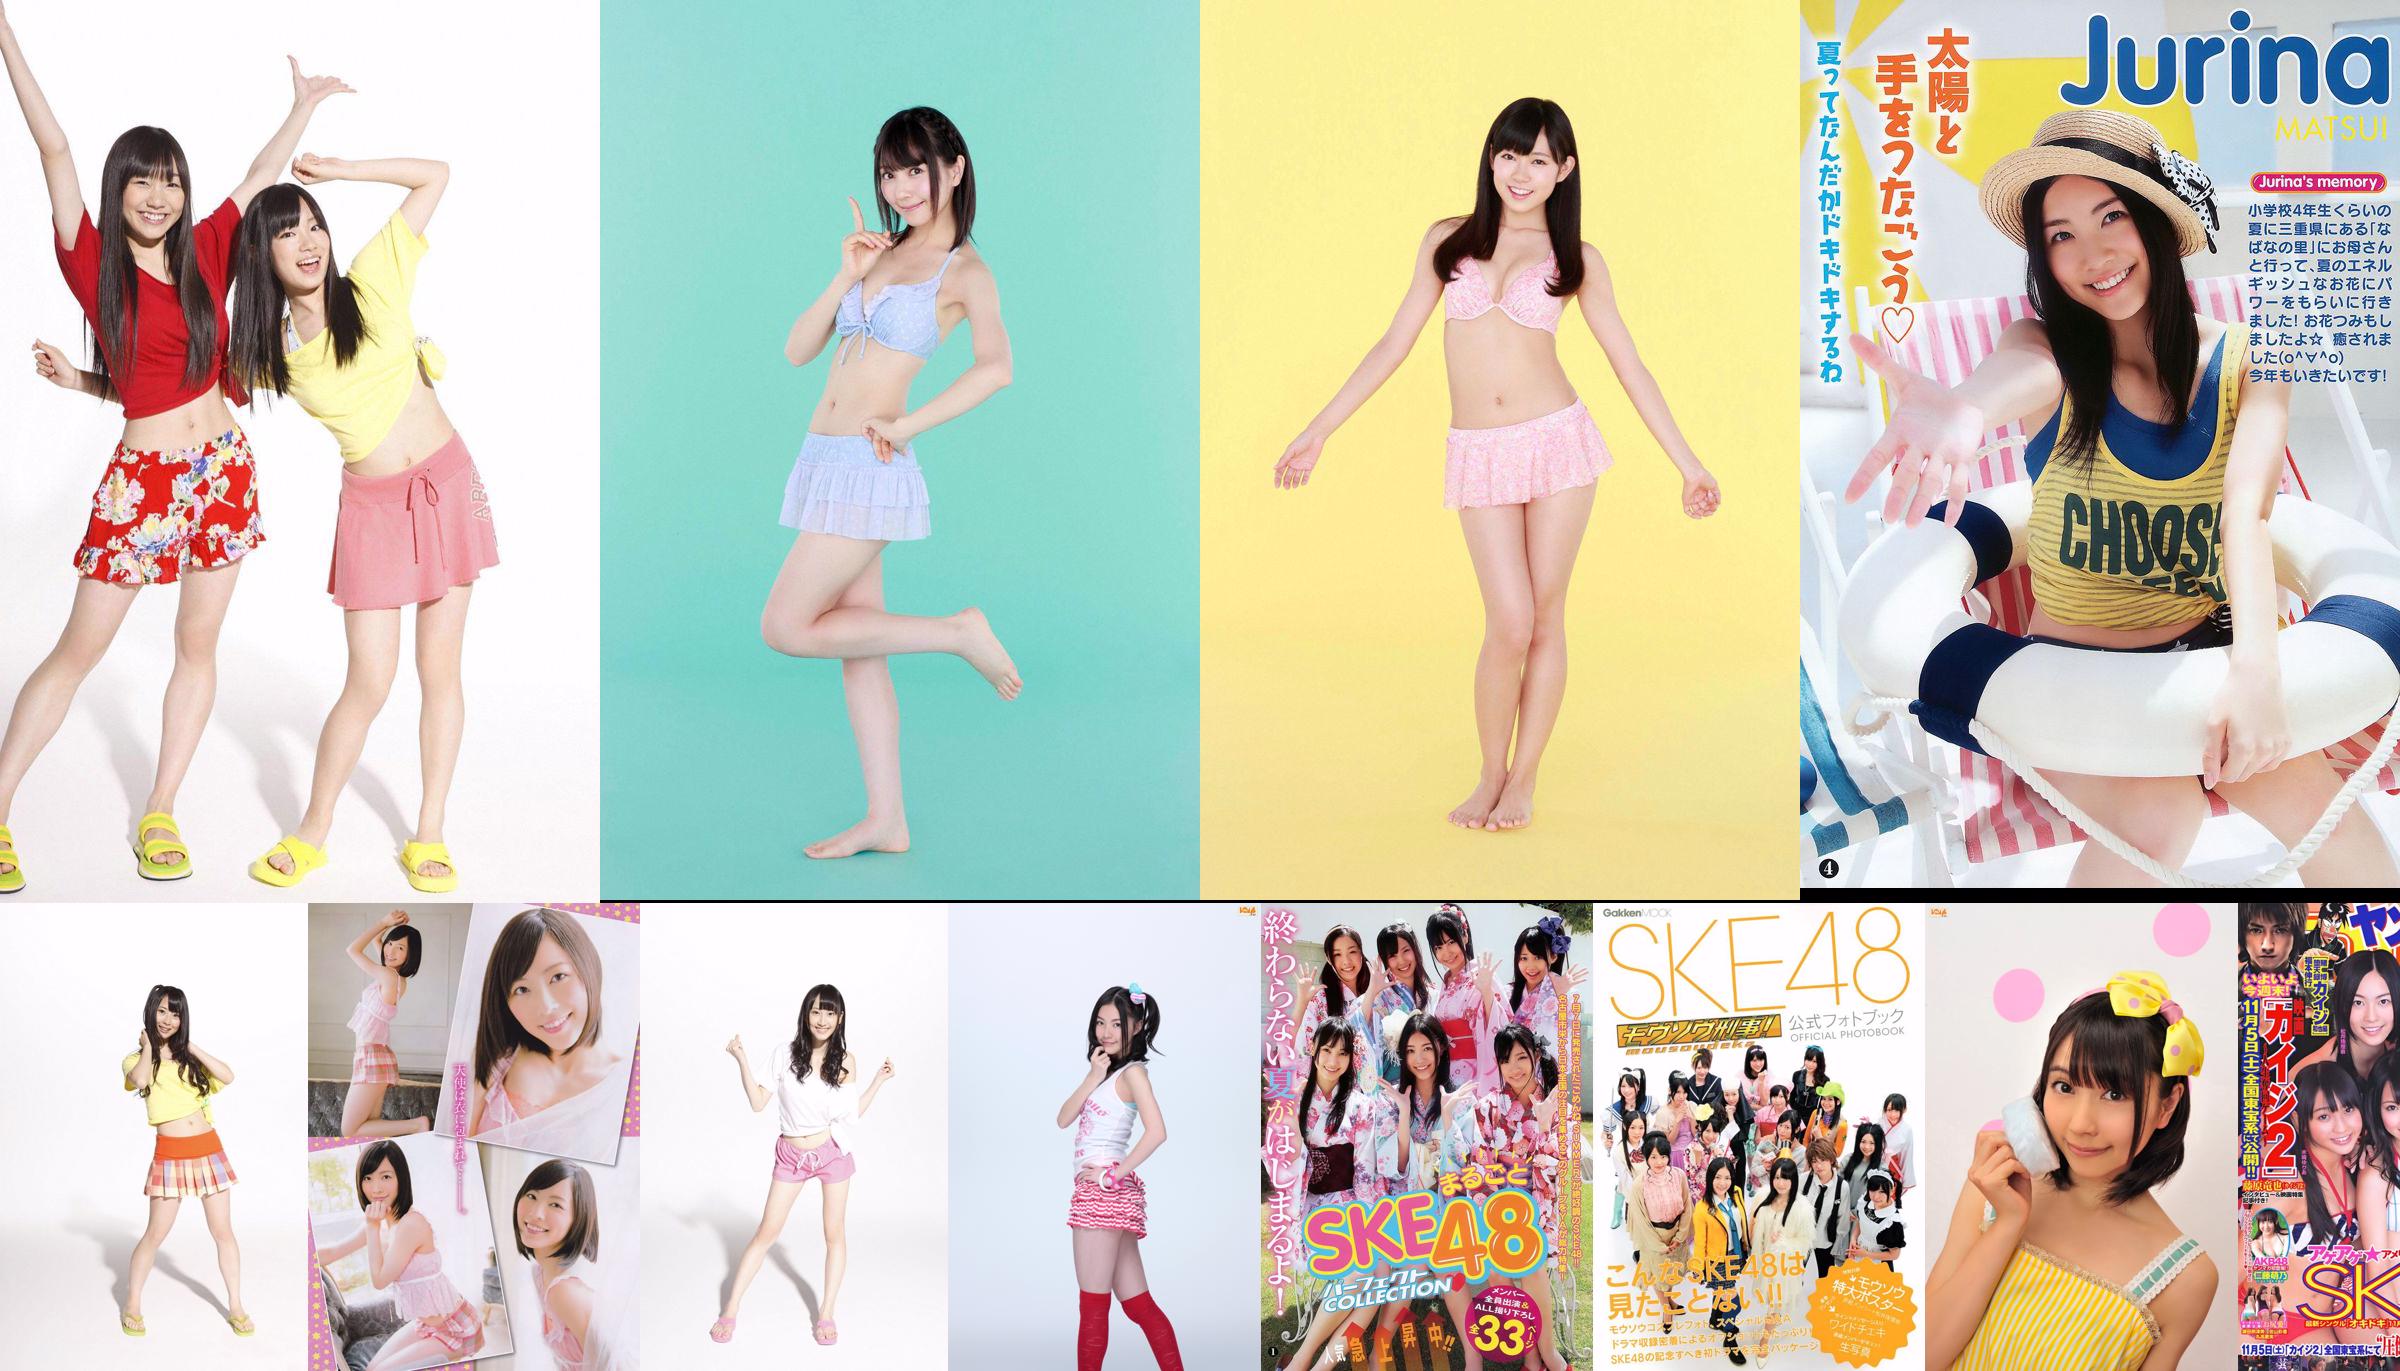 [Bomb.TV] Uitgave december 2011 Japan Idol Association SKE48 No.ec60a0 Pagina 1